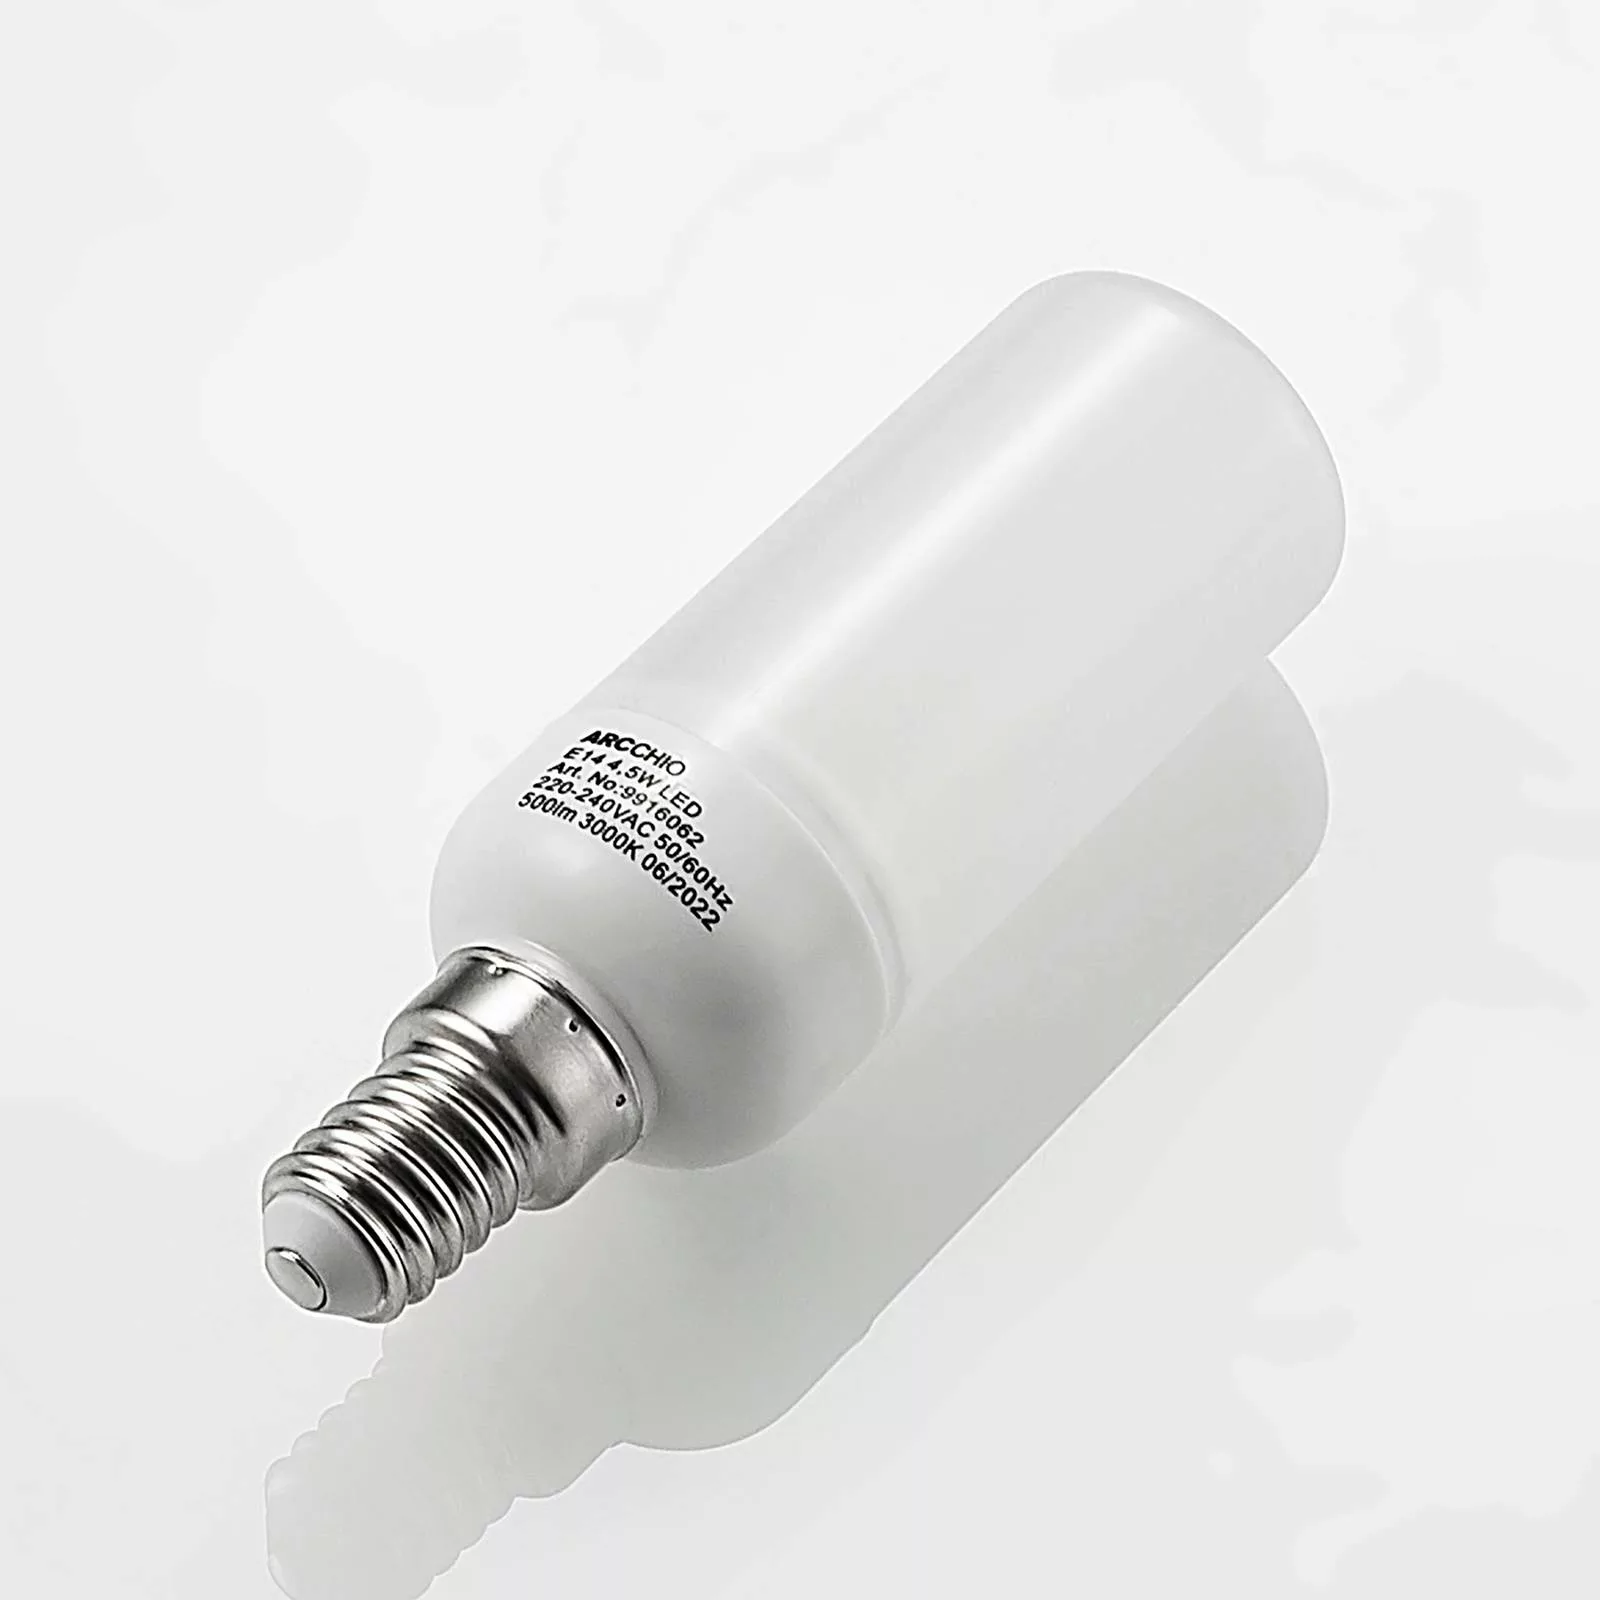 Arcchio LED-Röhrenlampe E14 4,5W 3.000K 4er-Set günstig online kaufen